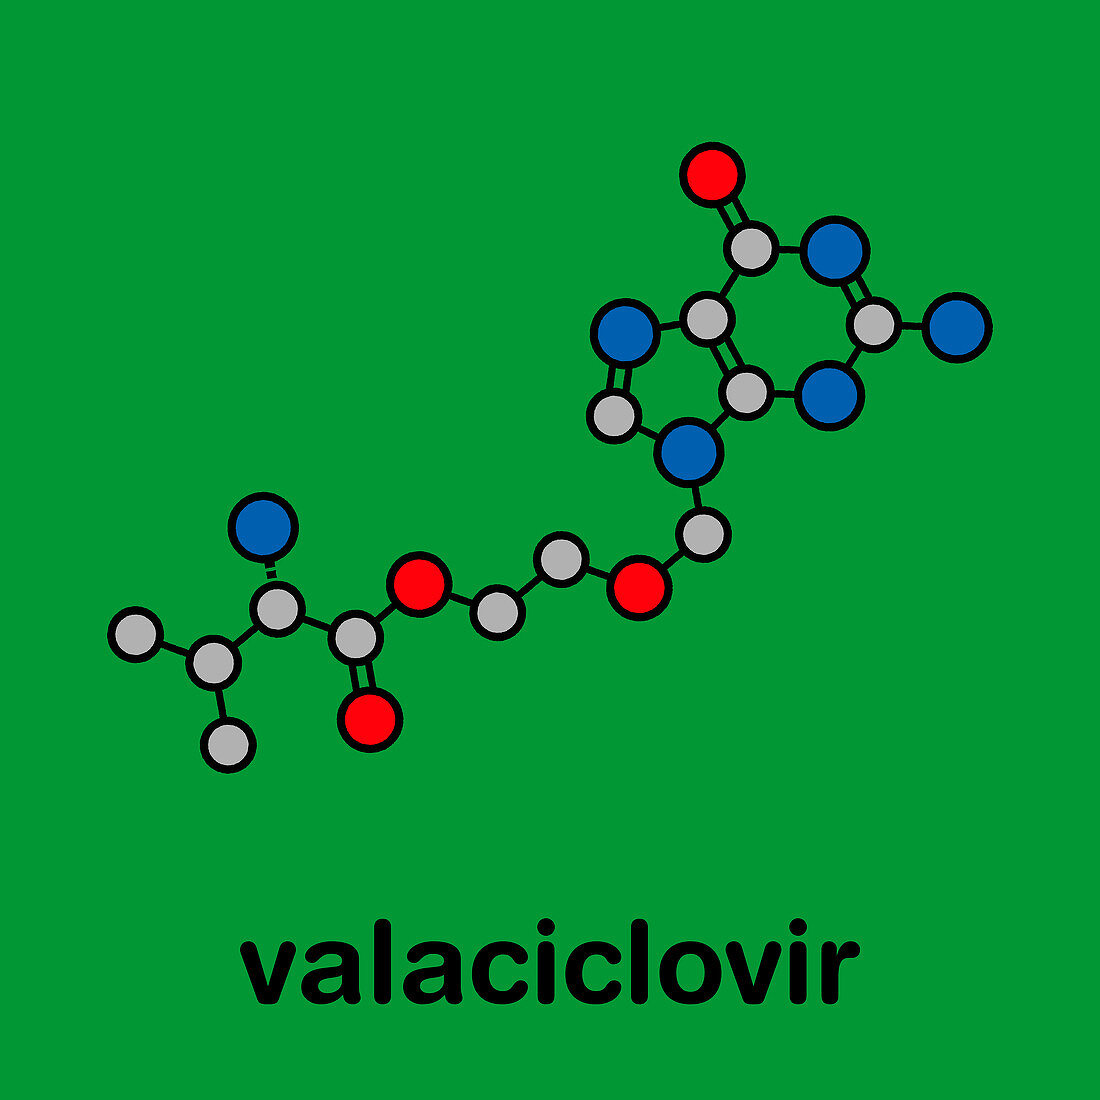 Valaciclovir herpes infection drug, molecular model